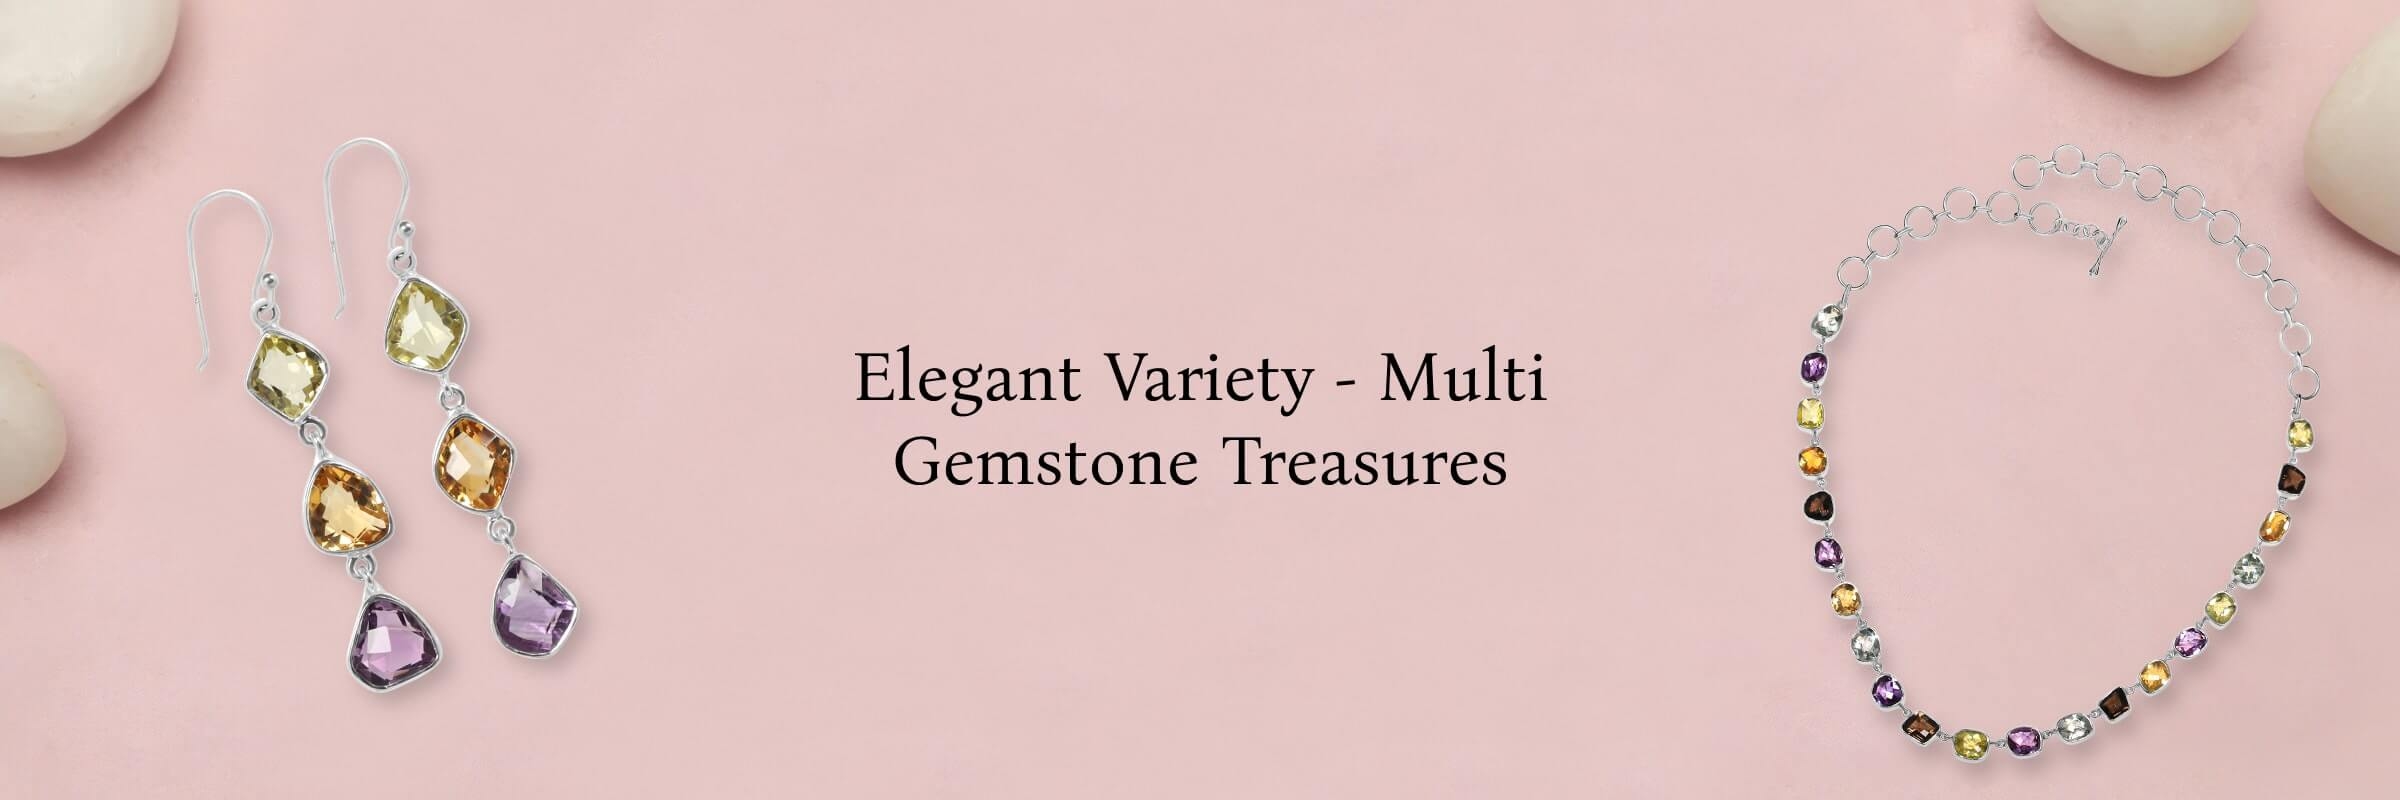 Types of Multi Gemstone Jewelry